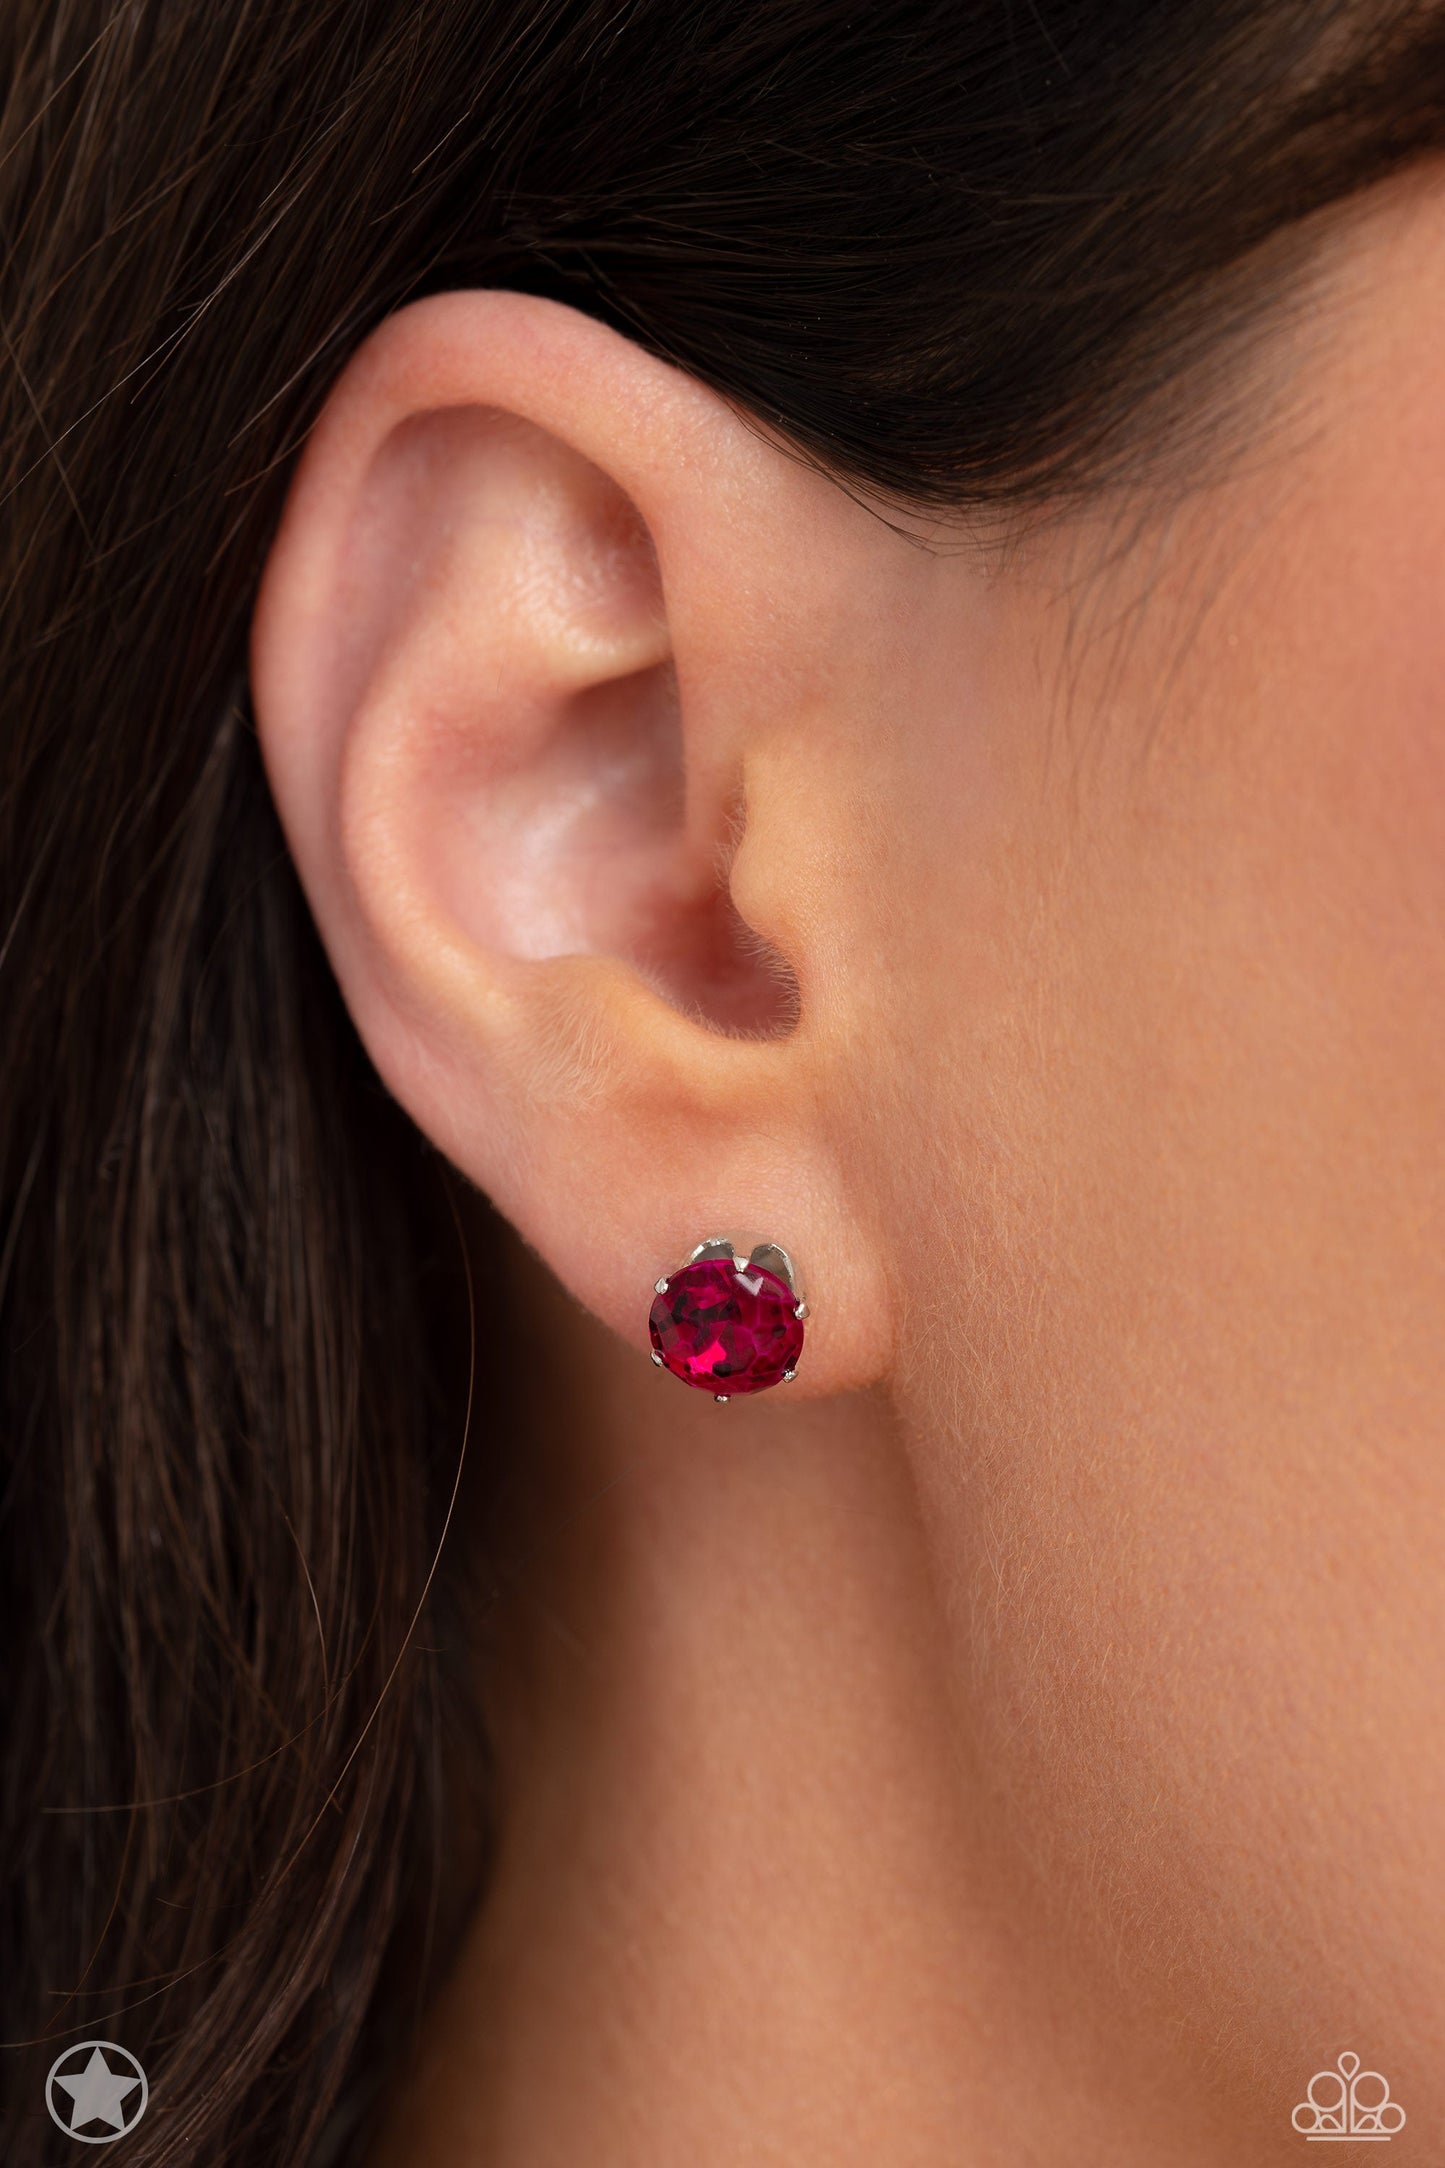 Just In TIMELESS - Pink/Fuchsia Rhinestone Paparazzi Post Earrings